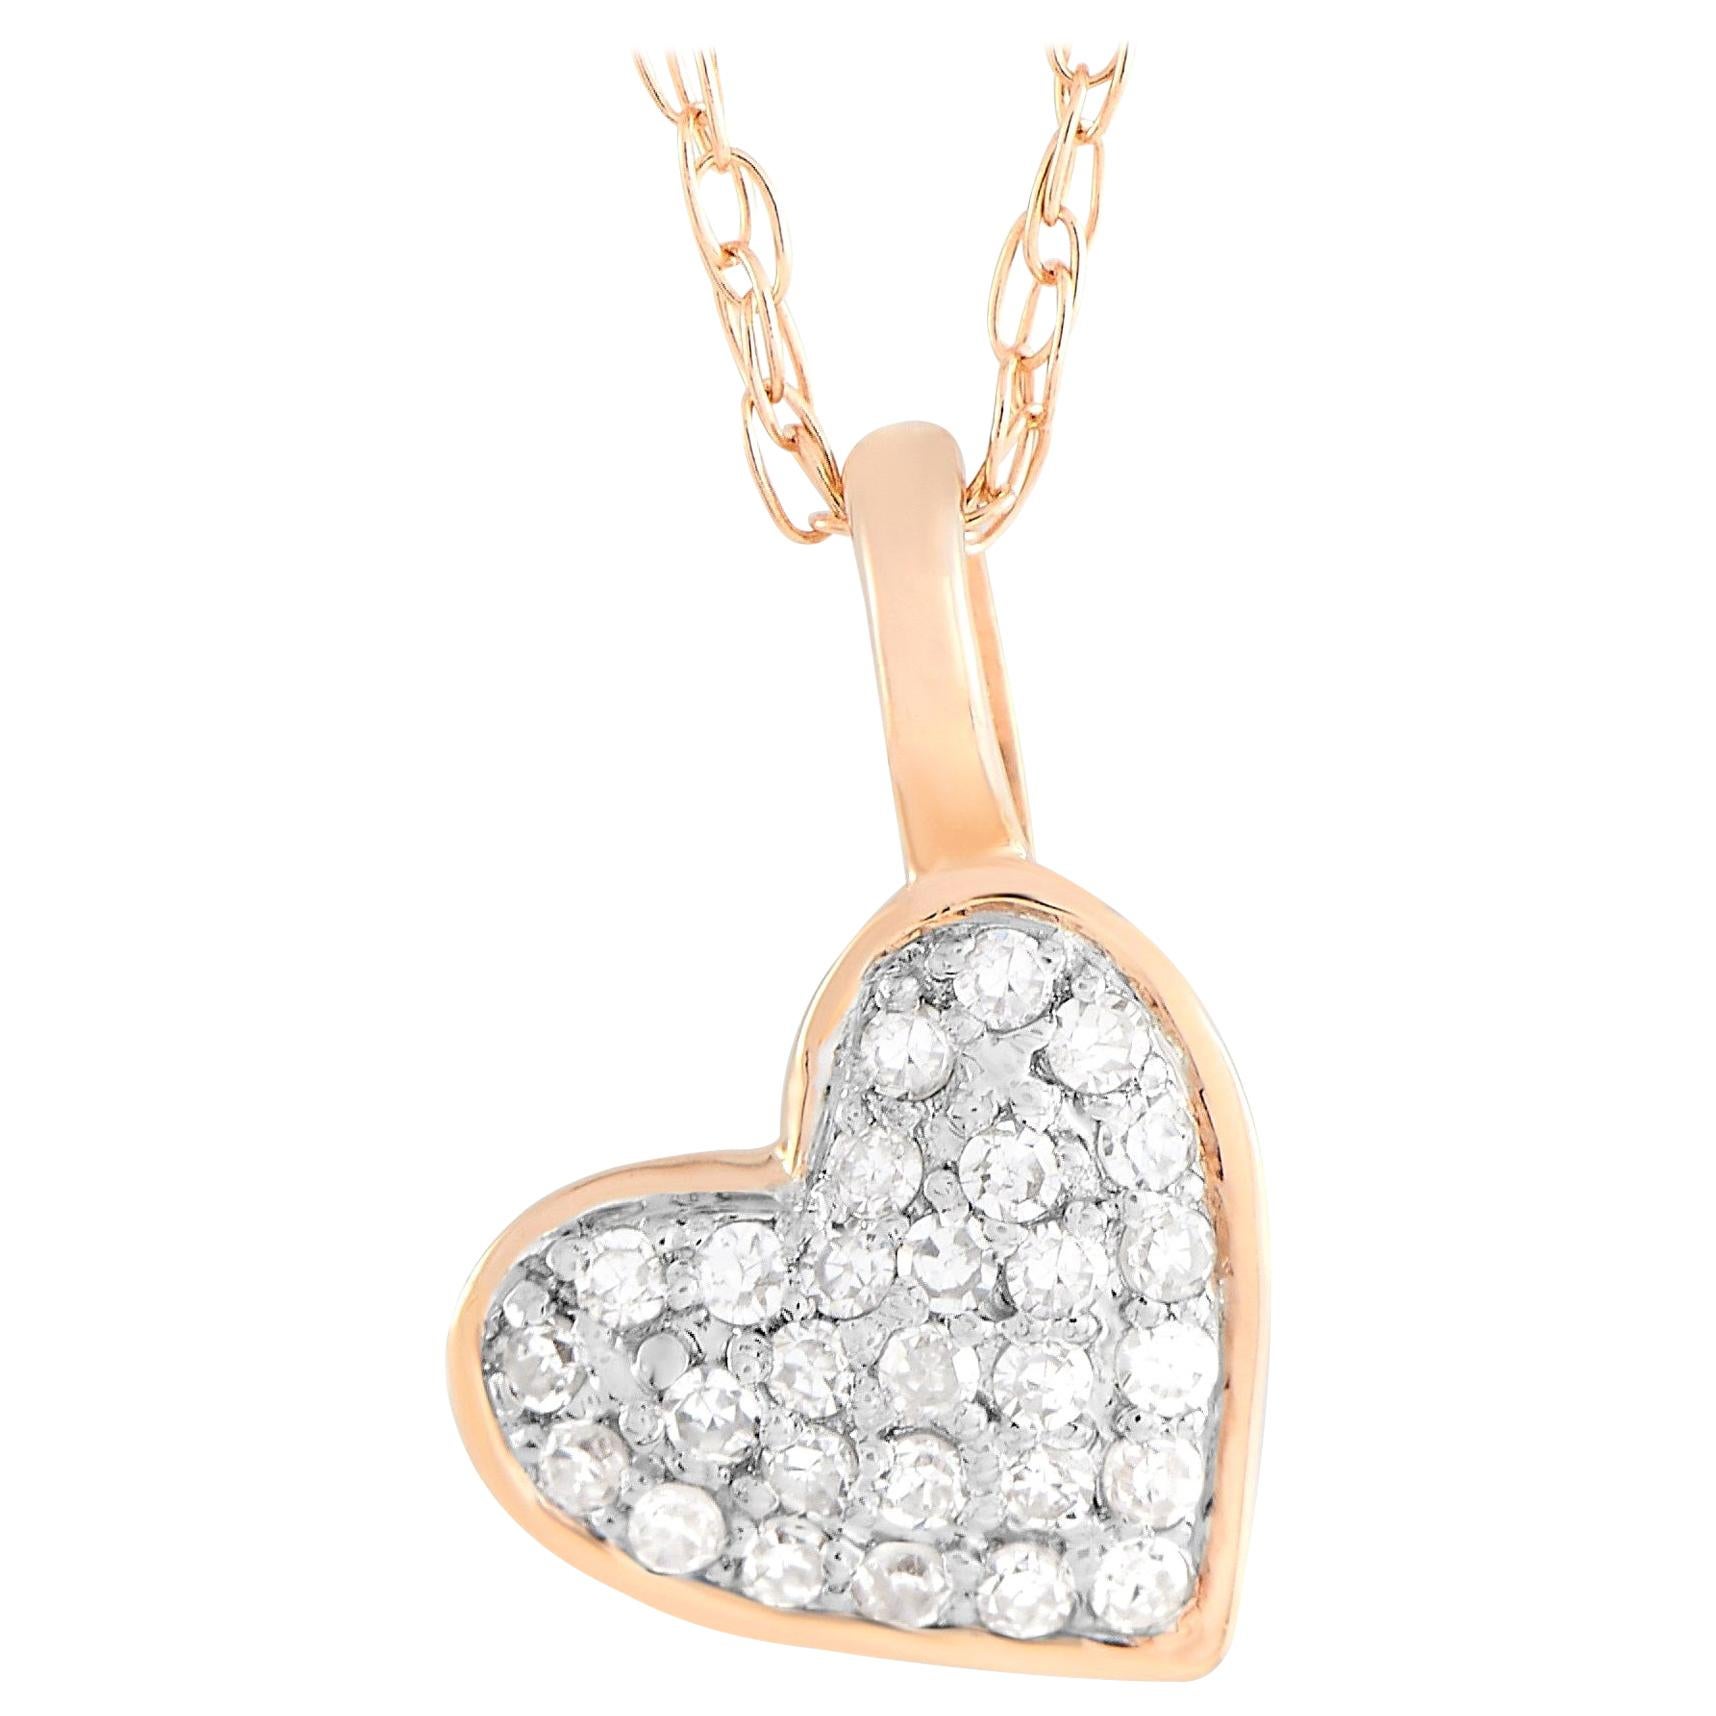 LB Exclusive 14 Karat Rose Gold 0.80 Carat Diamond Heart Pendant Necklace